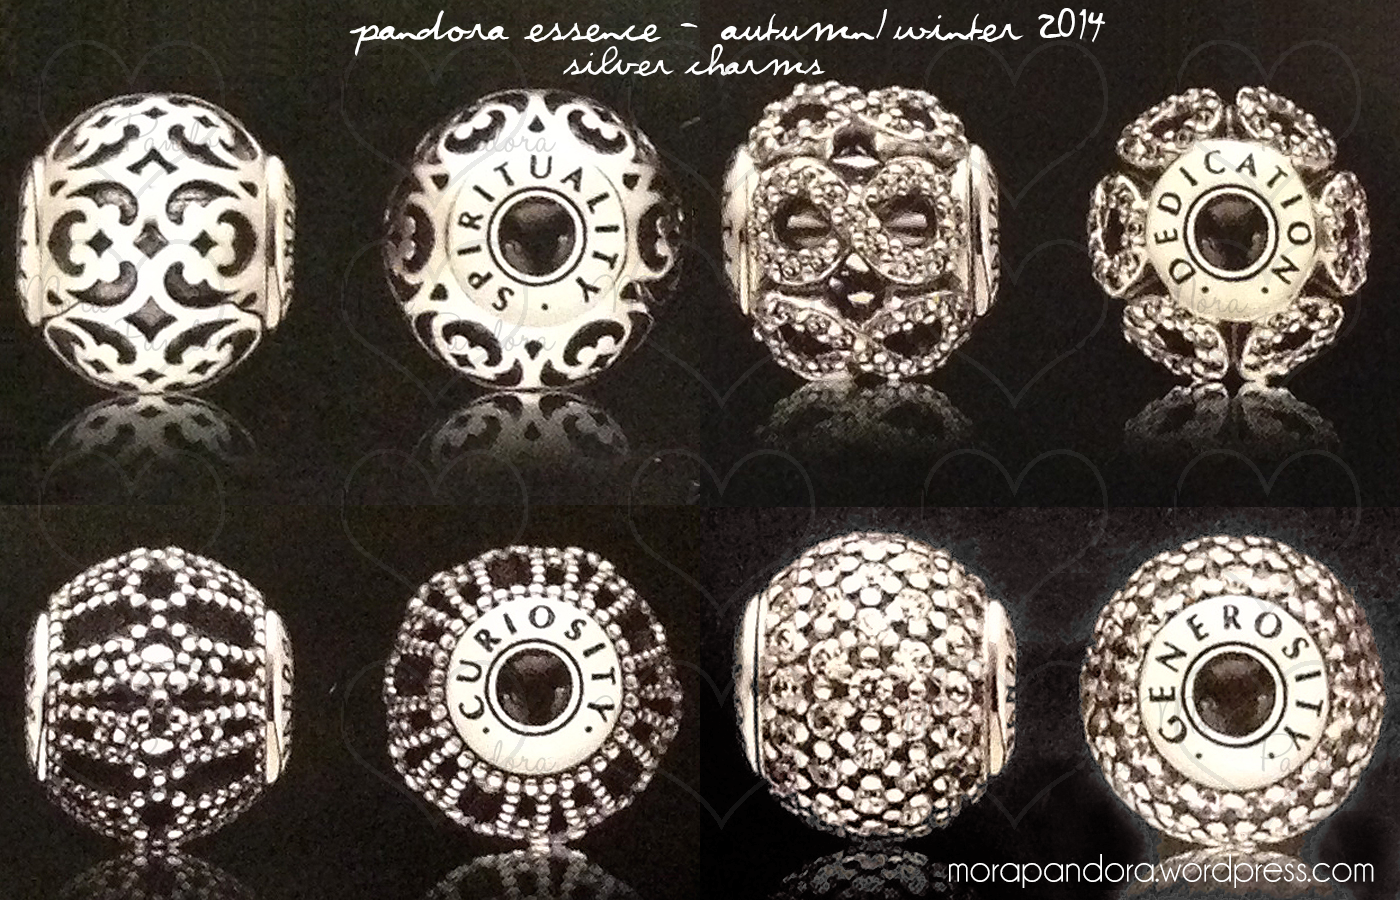 pandora essence 2014 silver